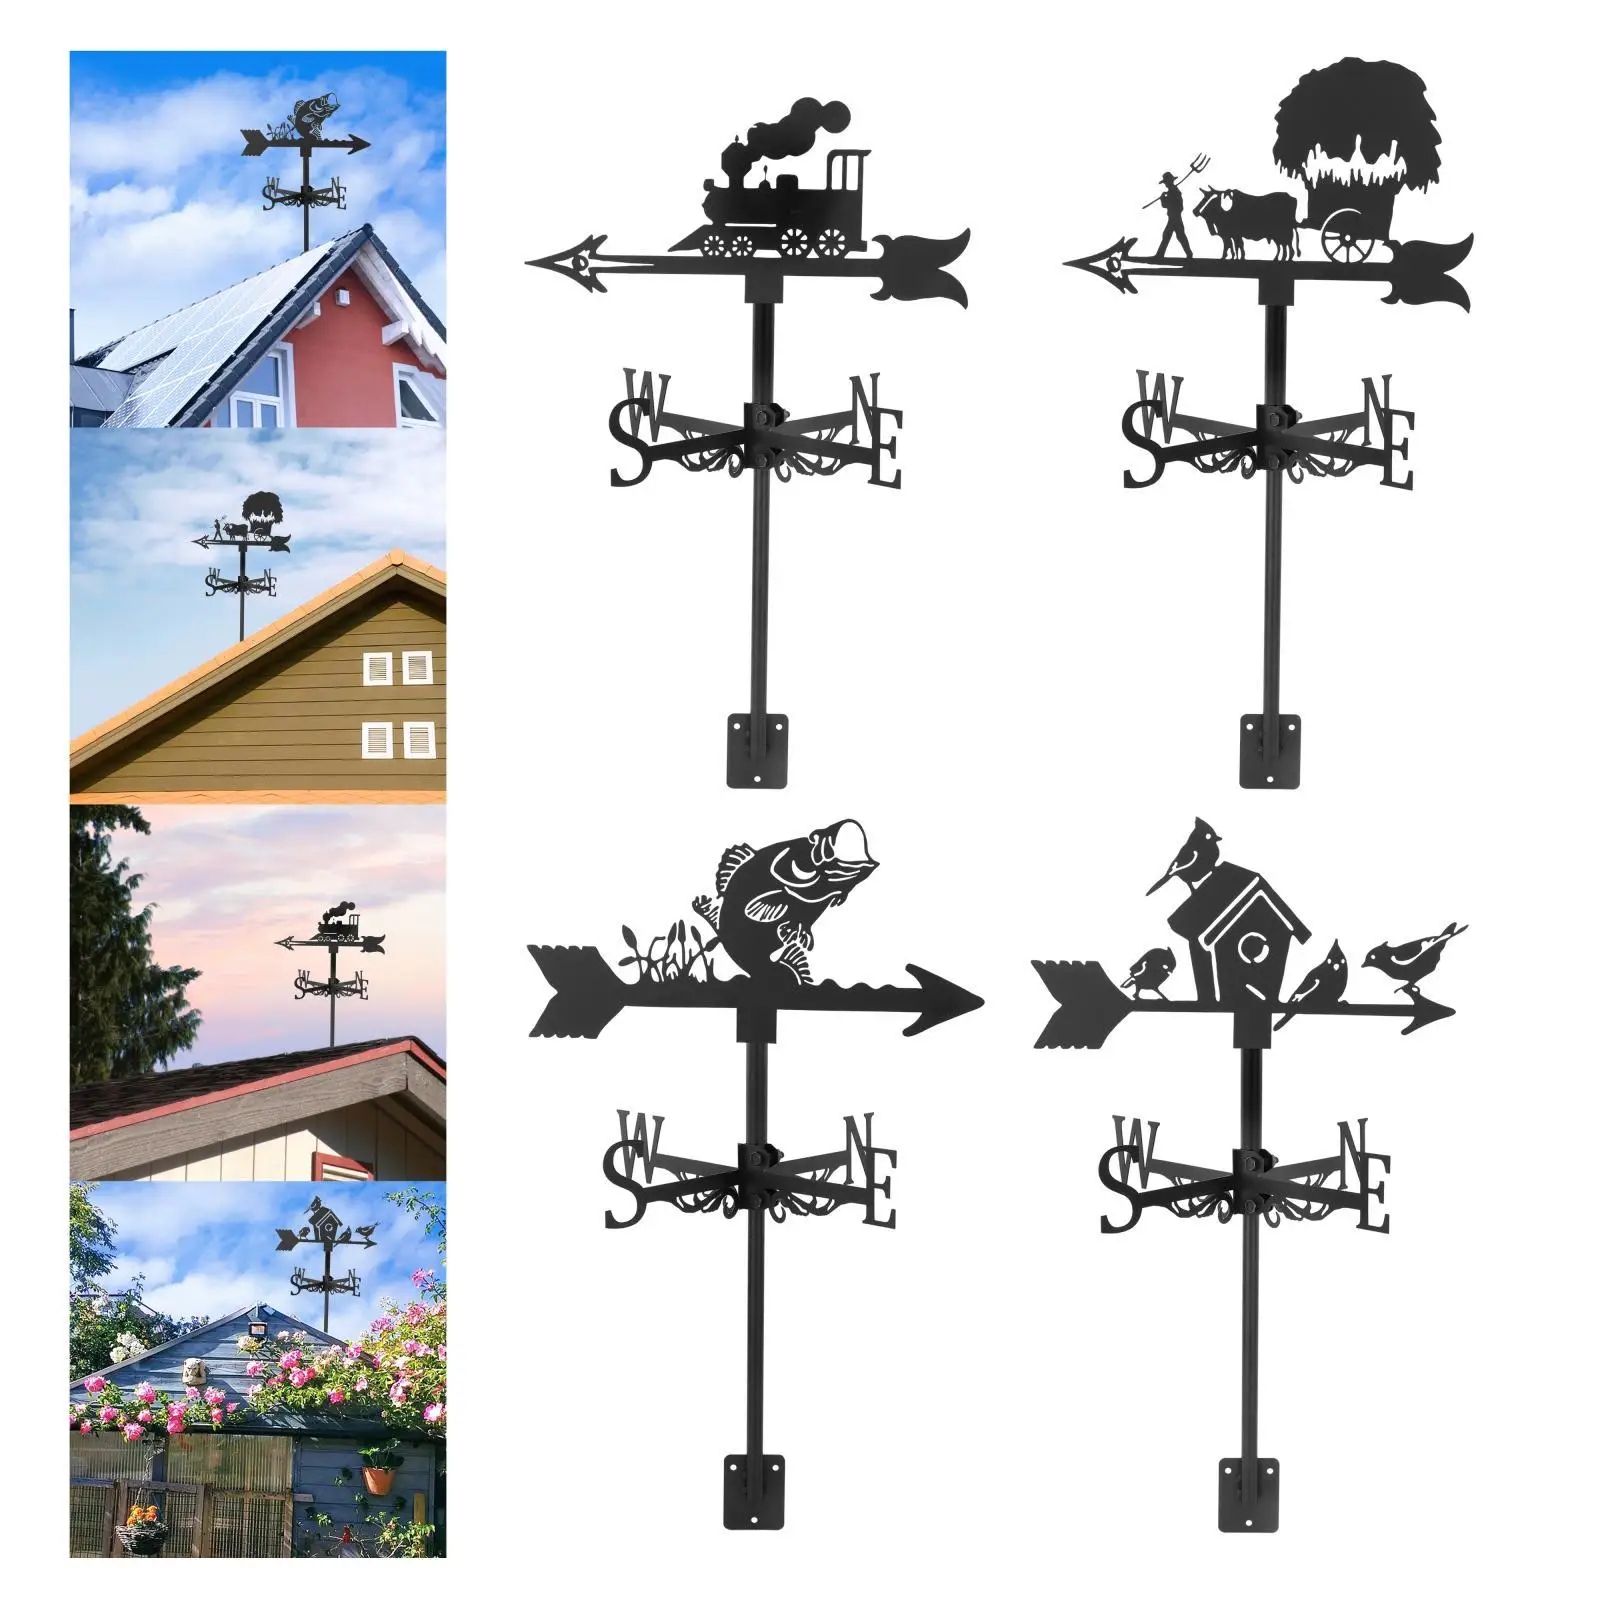 Iron Weather Vane Roof Mount Measuring Tools Farm Scene Wind Direction Indicator for Backyard Garden Farm Decor Ornaments